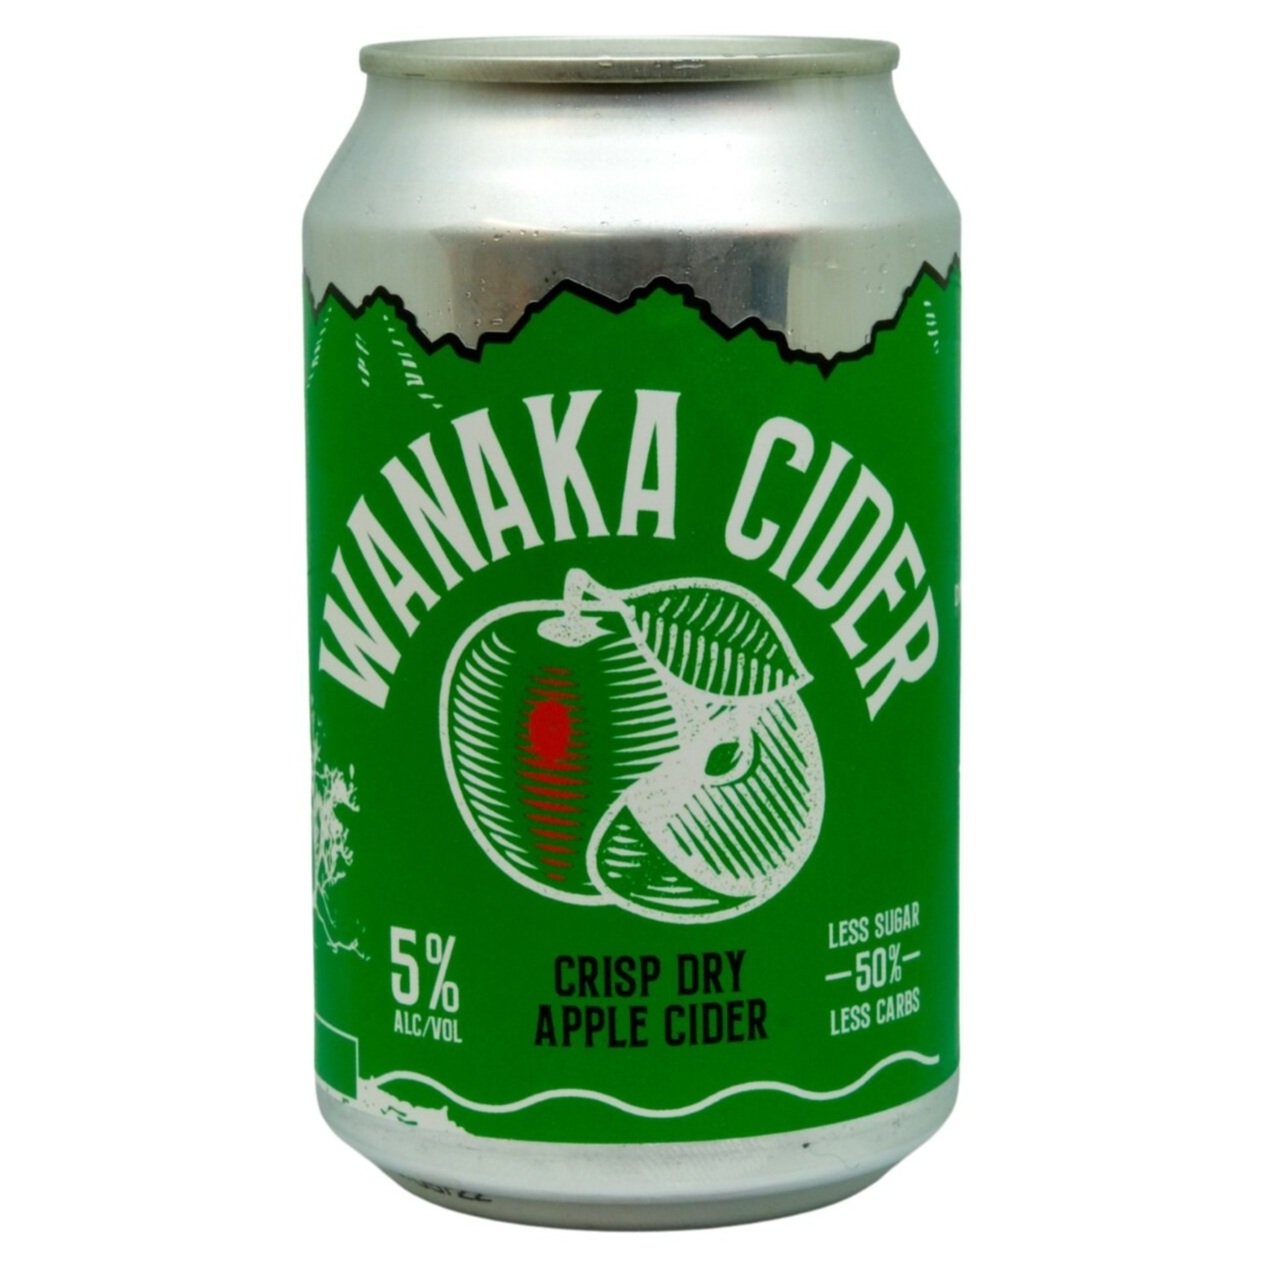 Wanaka Cider